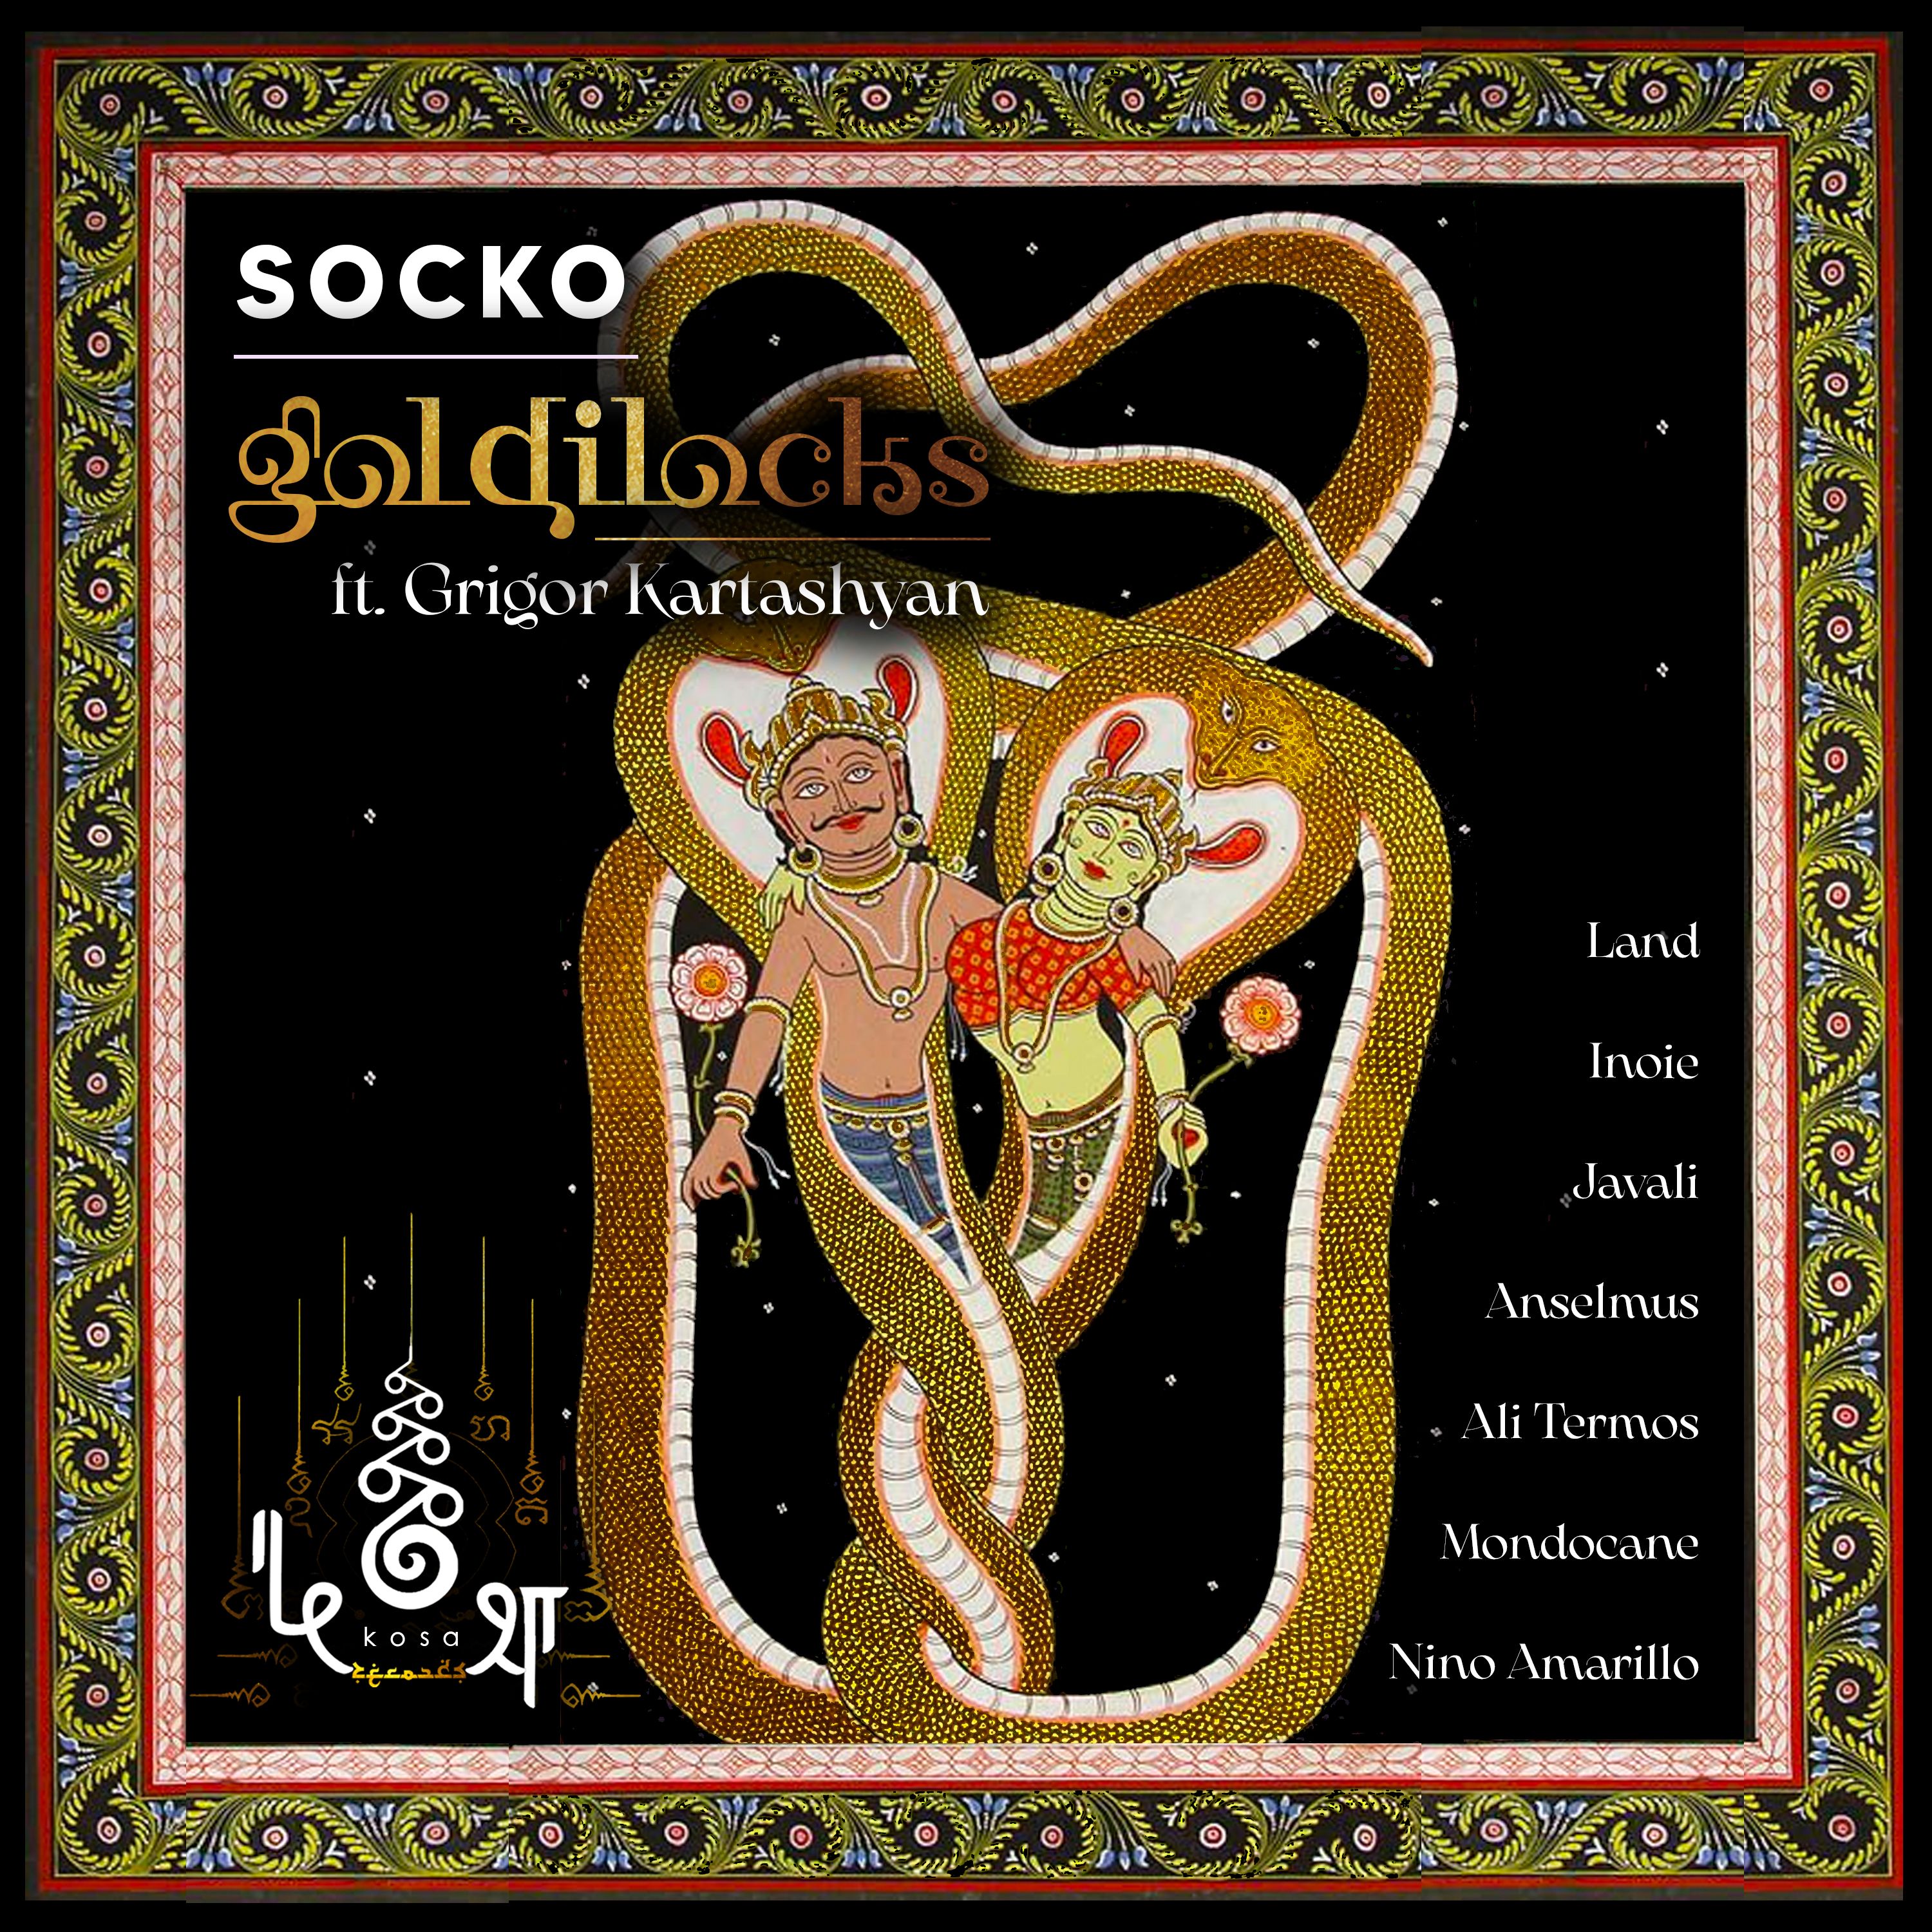 𝐏𝐑𝐄𝐌𝐈𝐄𝐑𝐄: Socko - Goldilocks Ft. Grigor Kartashyan (Ali Termos Remix) [Kosa]